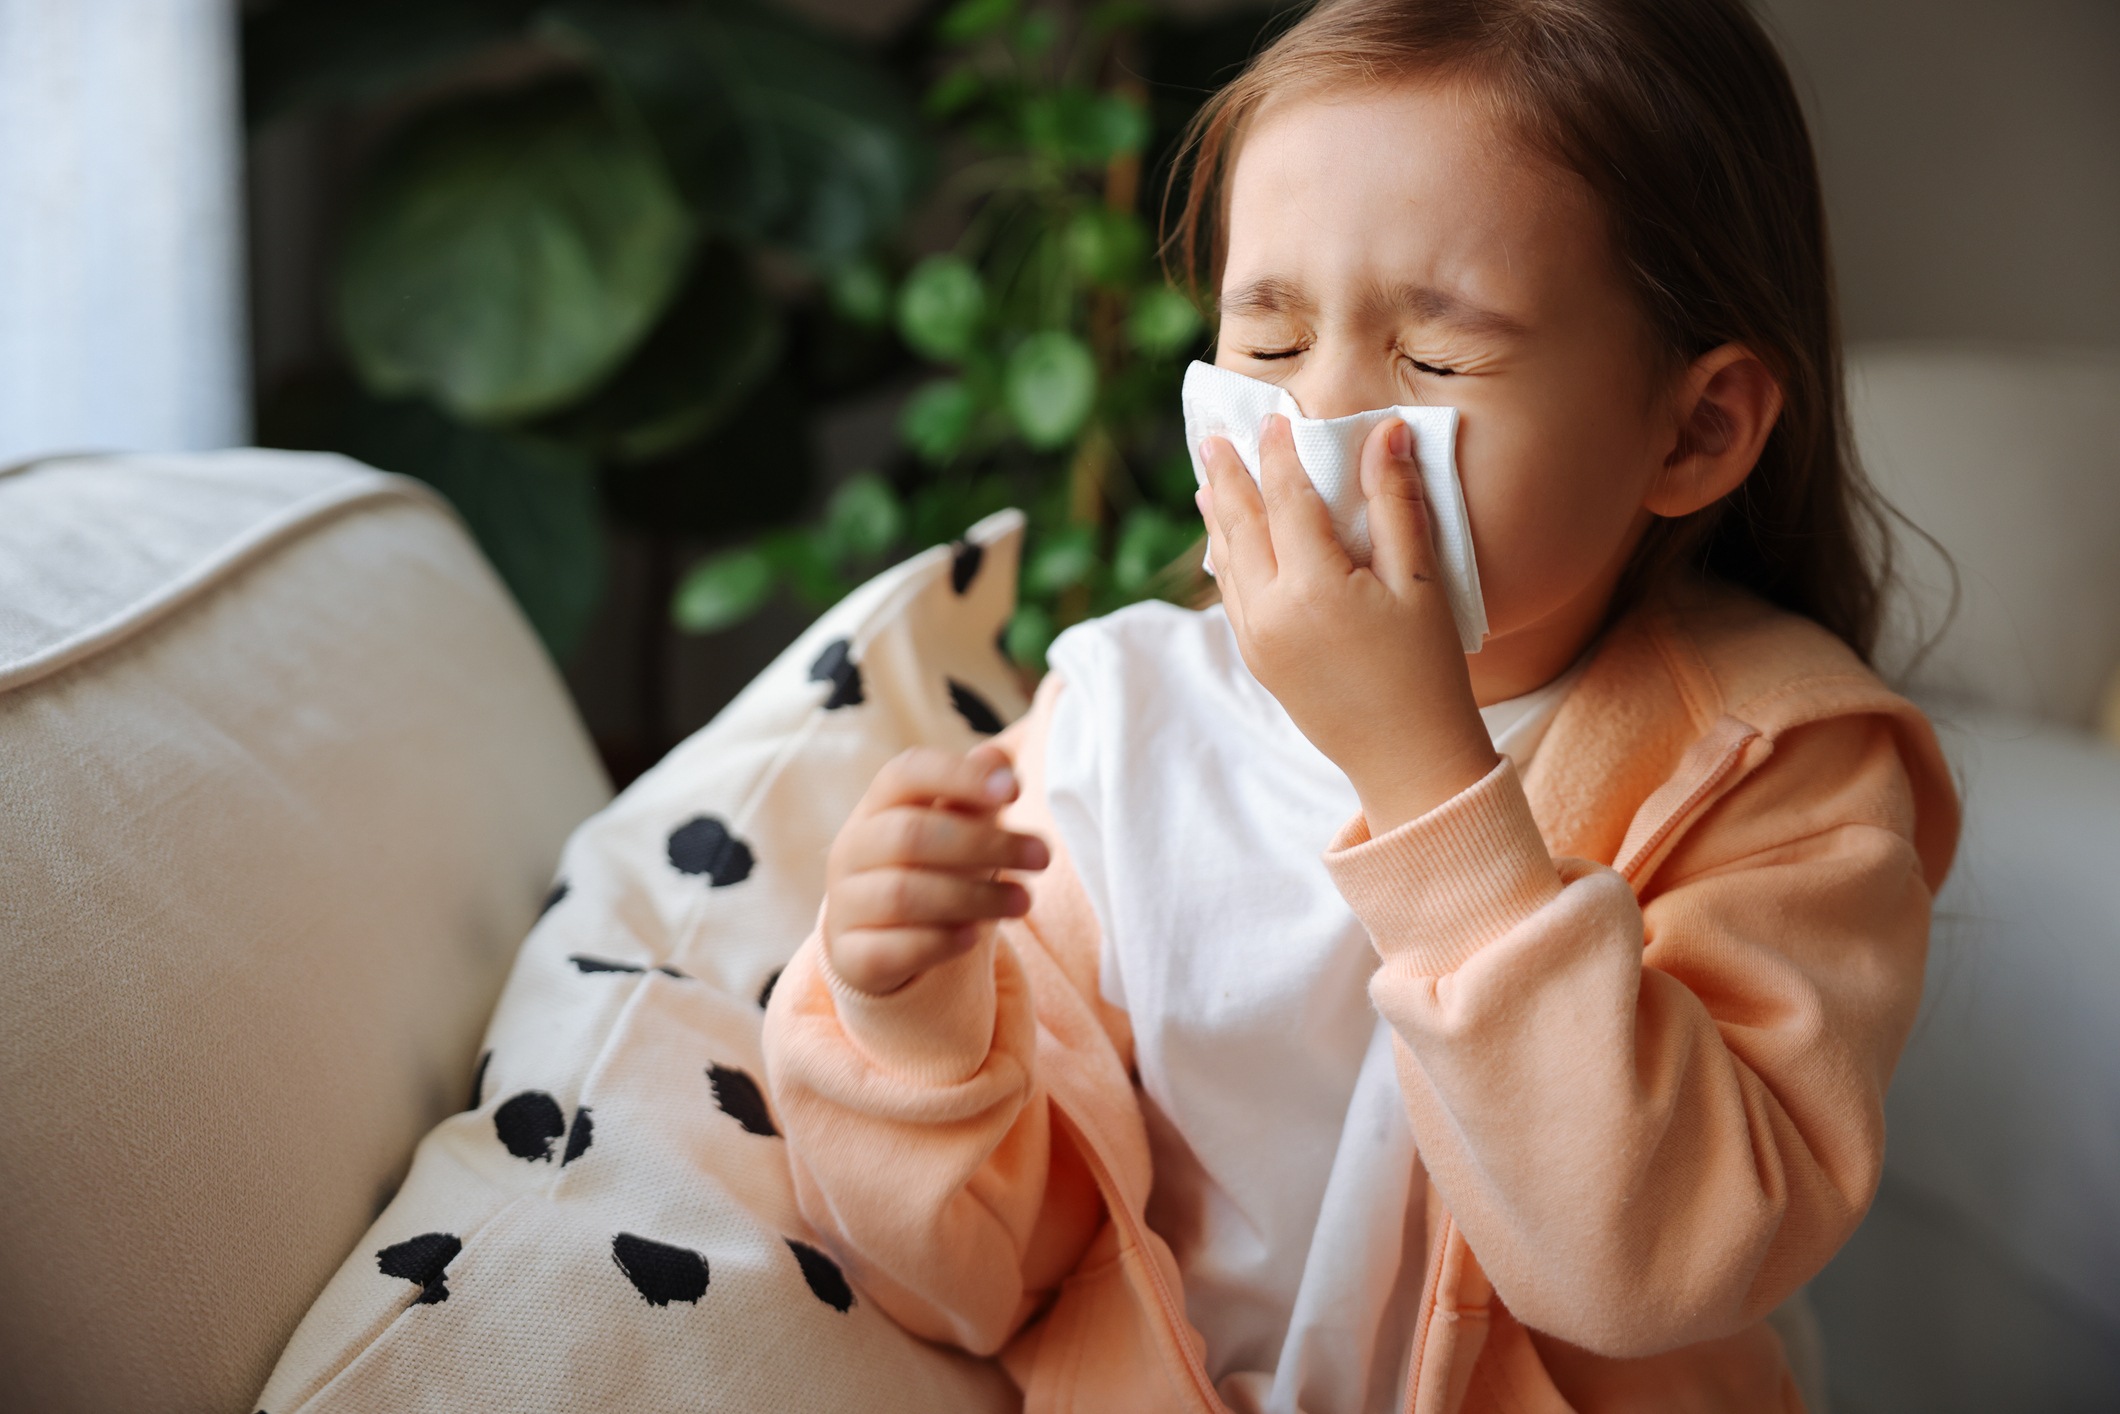 THD Urges Respiratory Illness Prevention as Flu Season Nears Peak